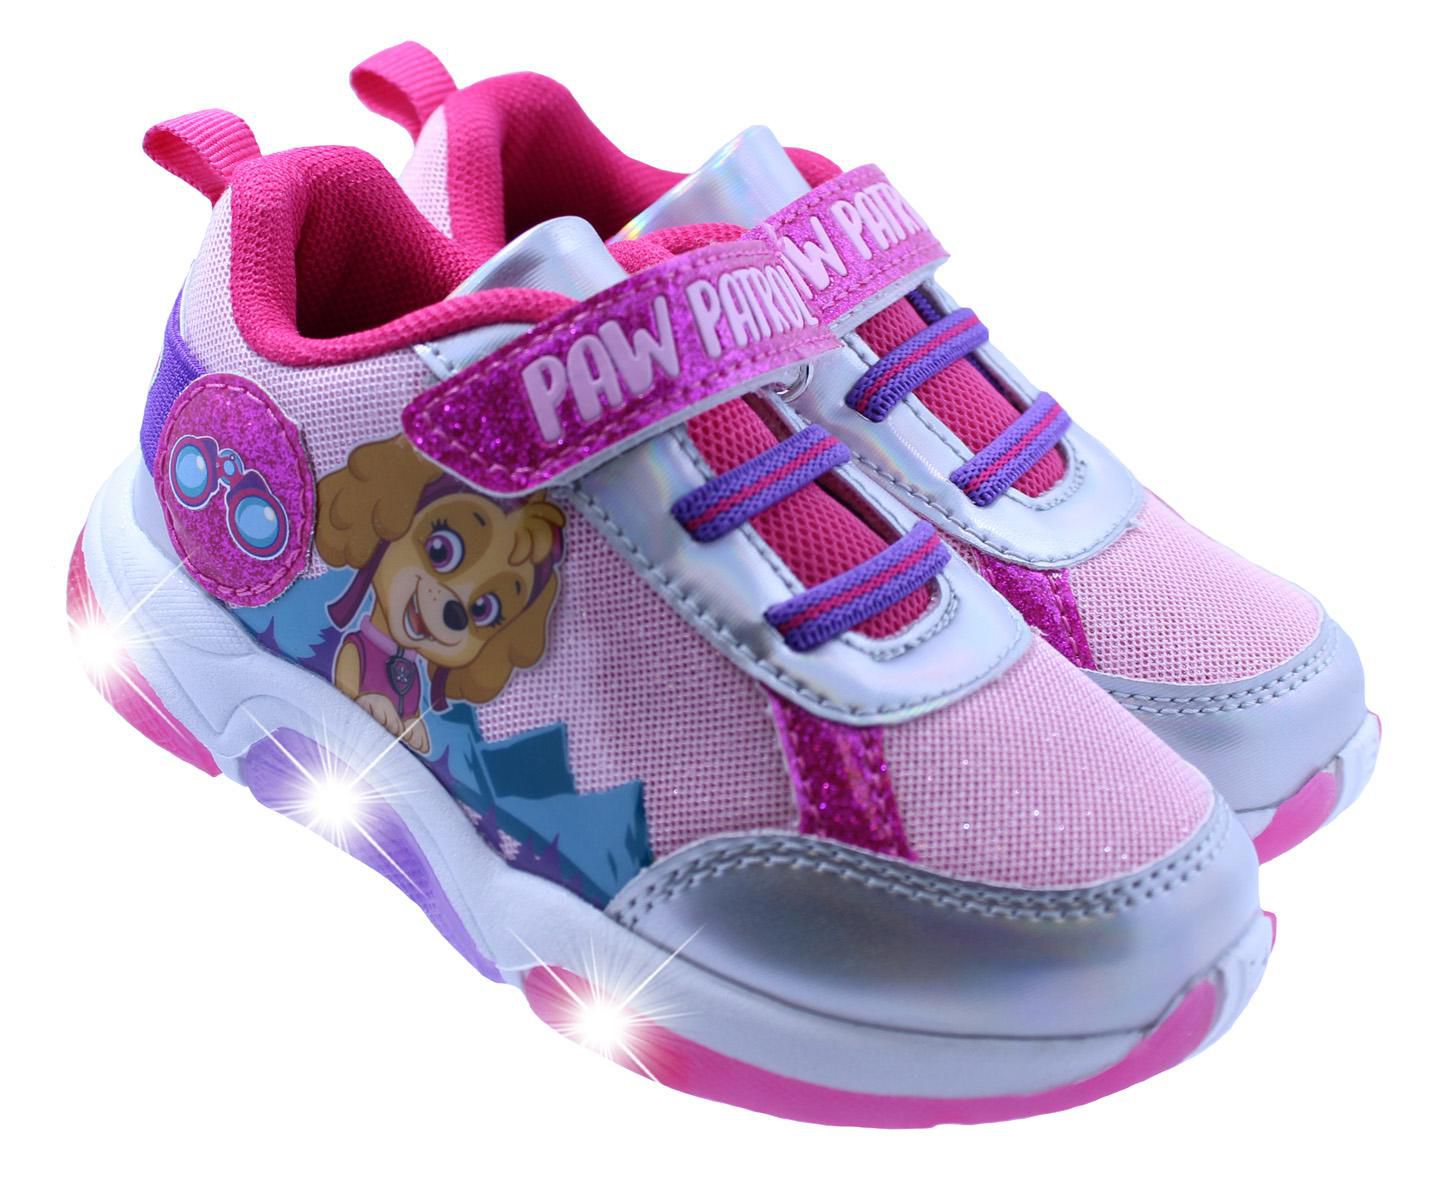 Lighted Patrol Shoes for Toddler Girls | Walmart